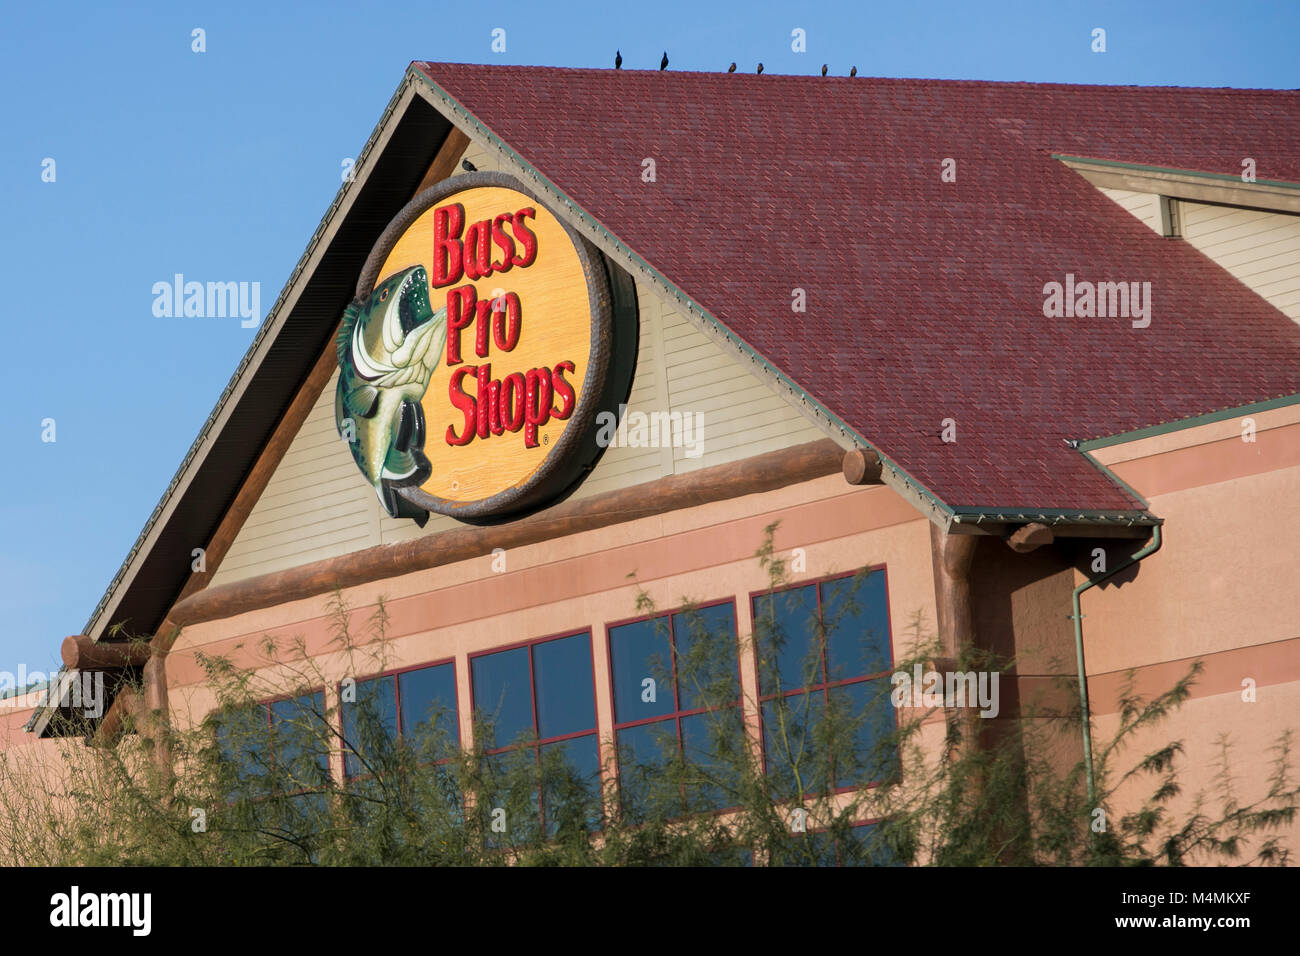 https://c8.alamy.com/comp/M4MKXF/a-logo-sign-outside-of-a-bass-pro-shops-retail-store-in-mesa-arizona-M4MKXF.jpg